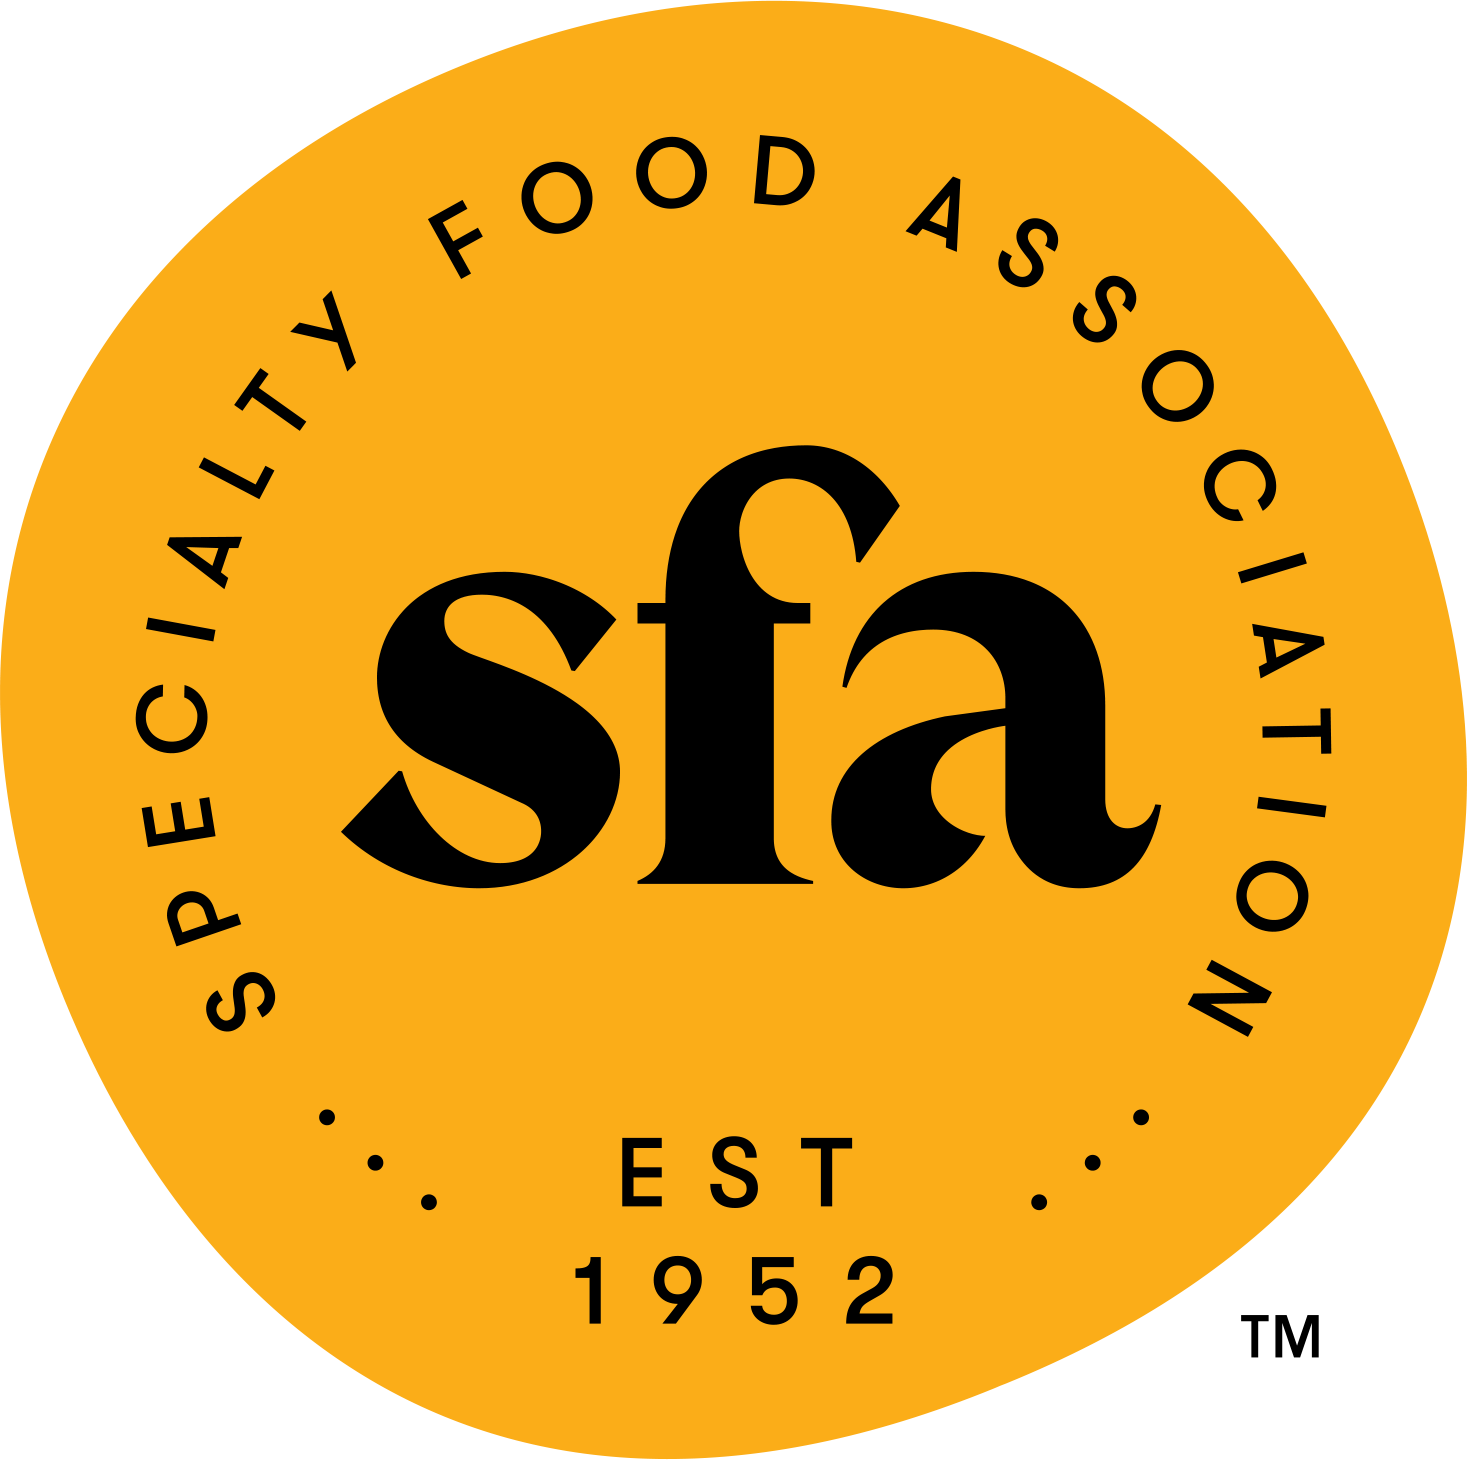 Specialty Food Association